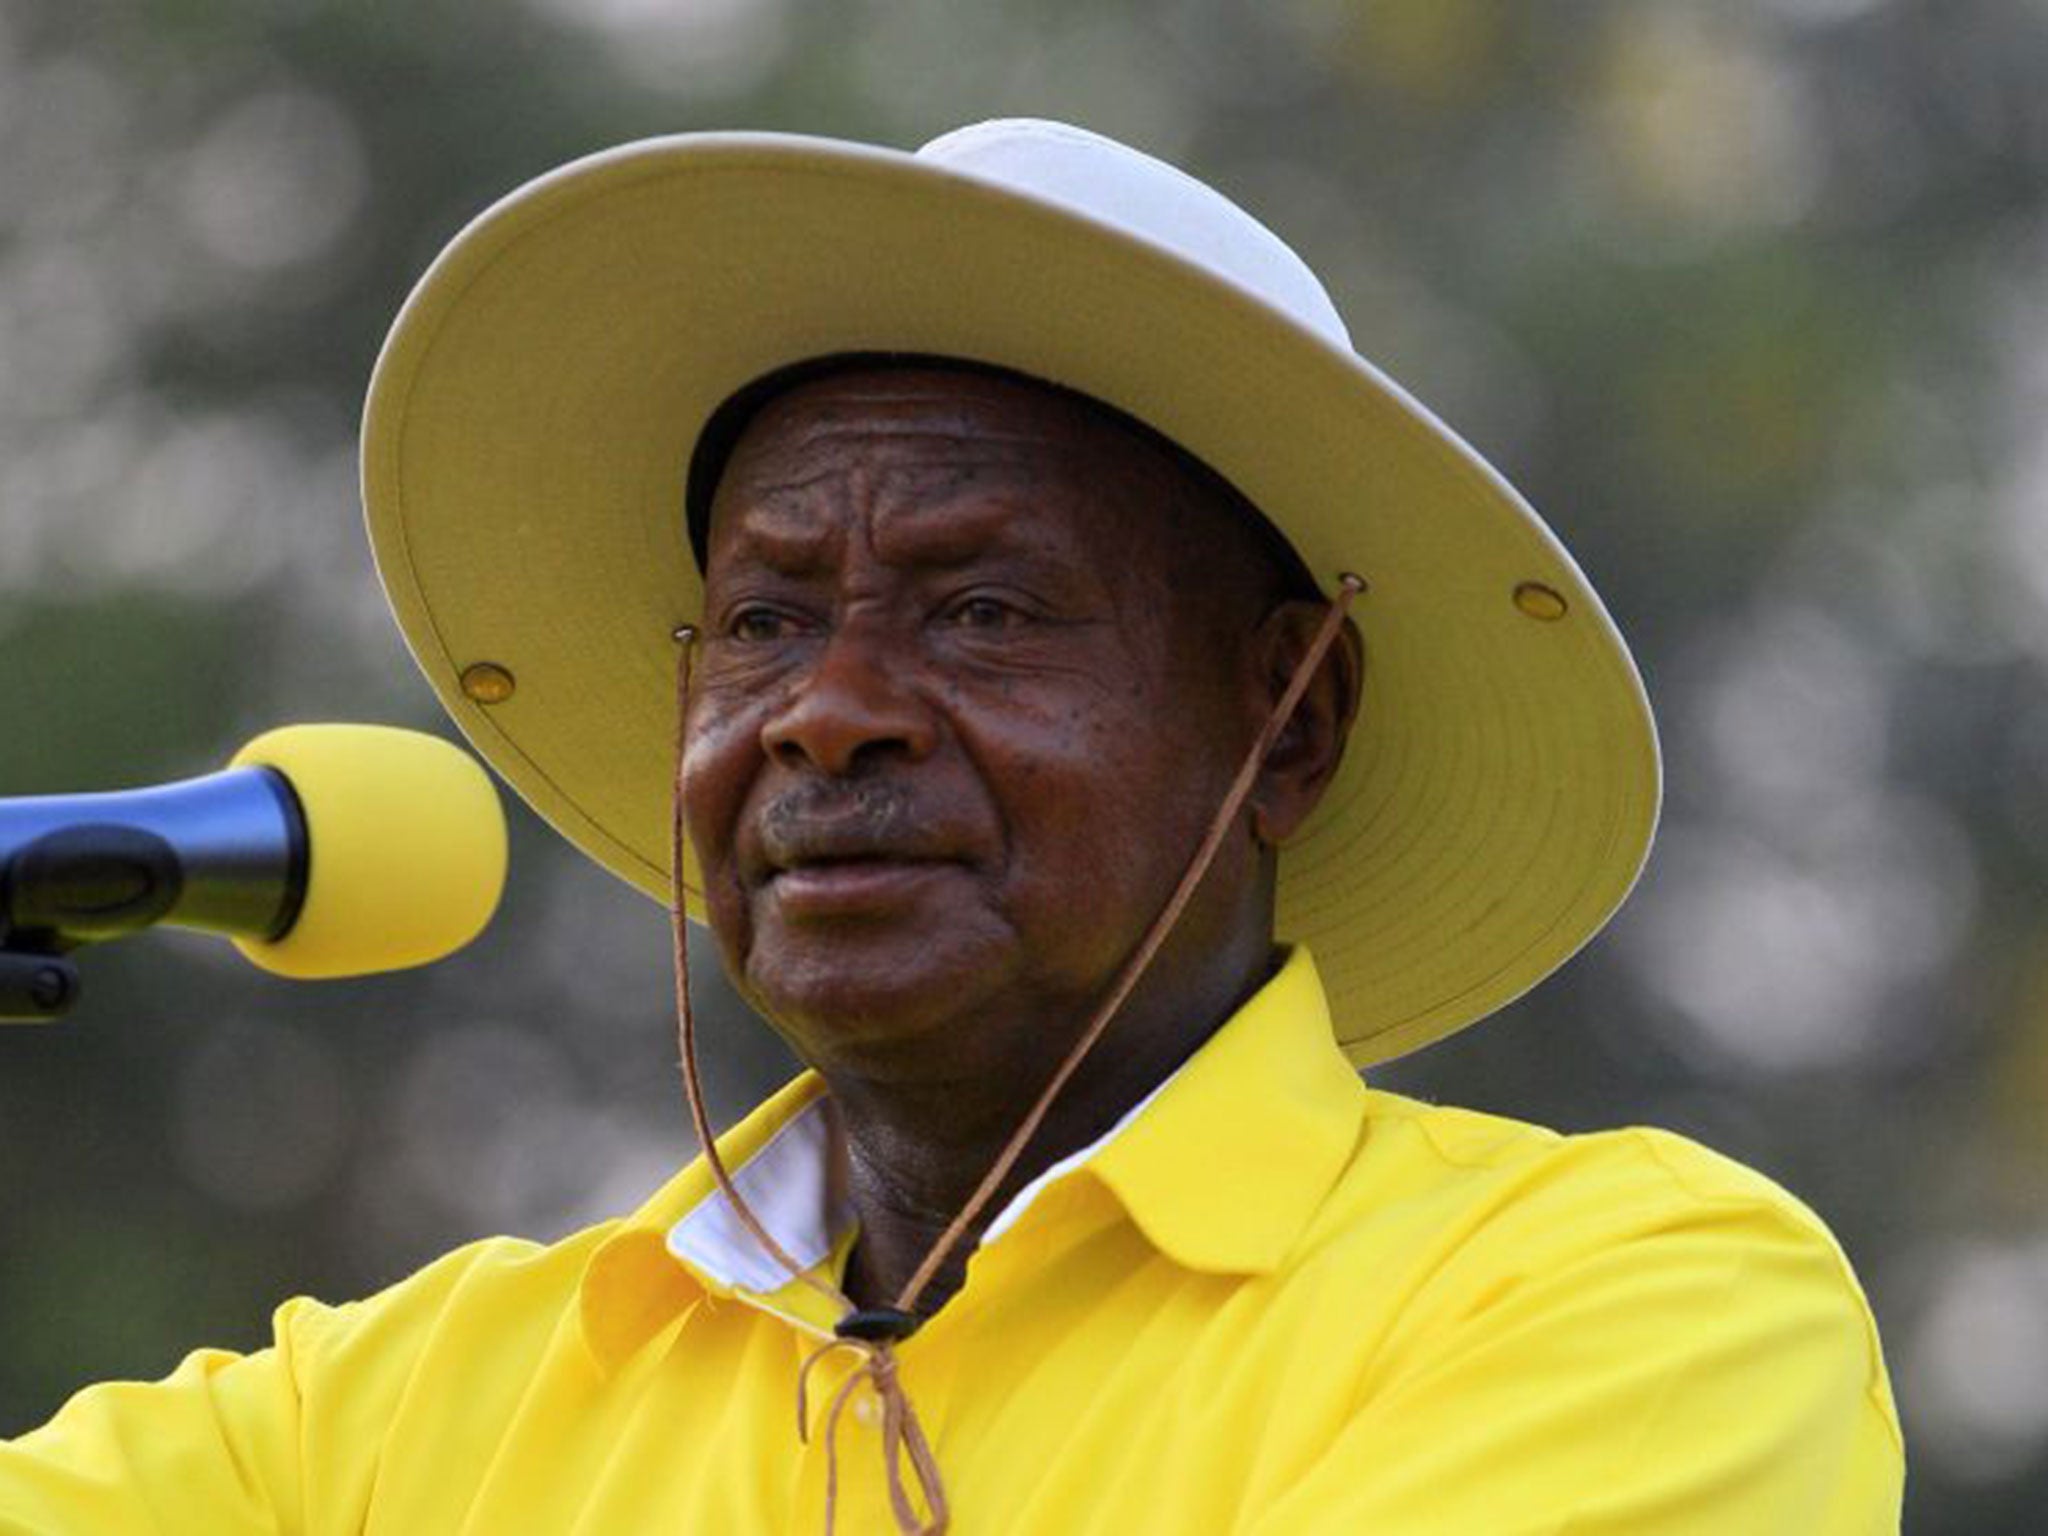 Uganda’s 71-year-old President Yoweri Museveni has held power for 30 years